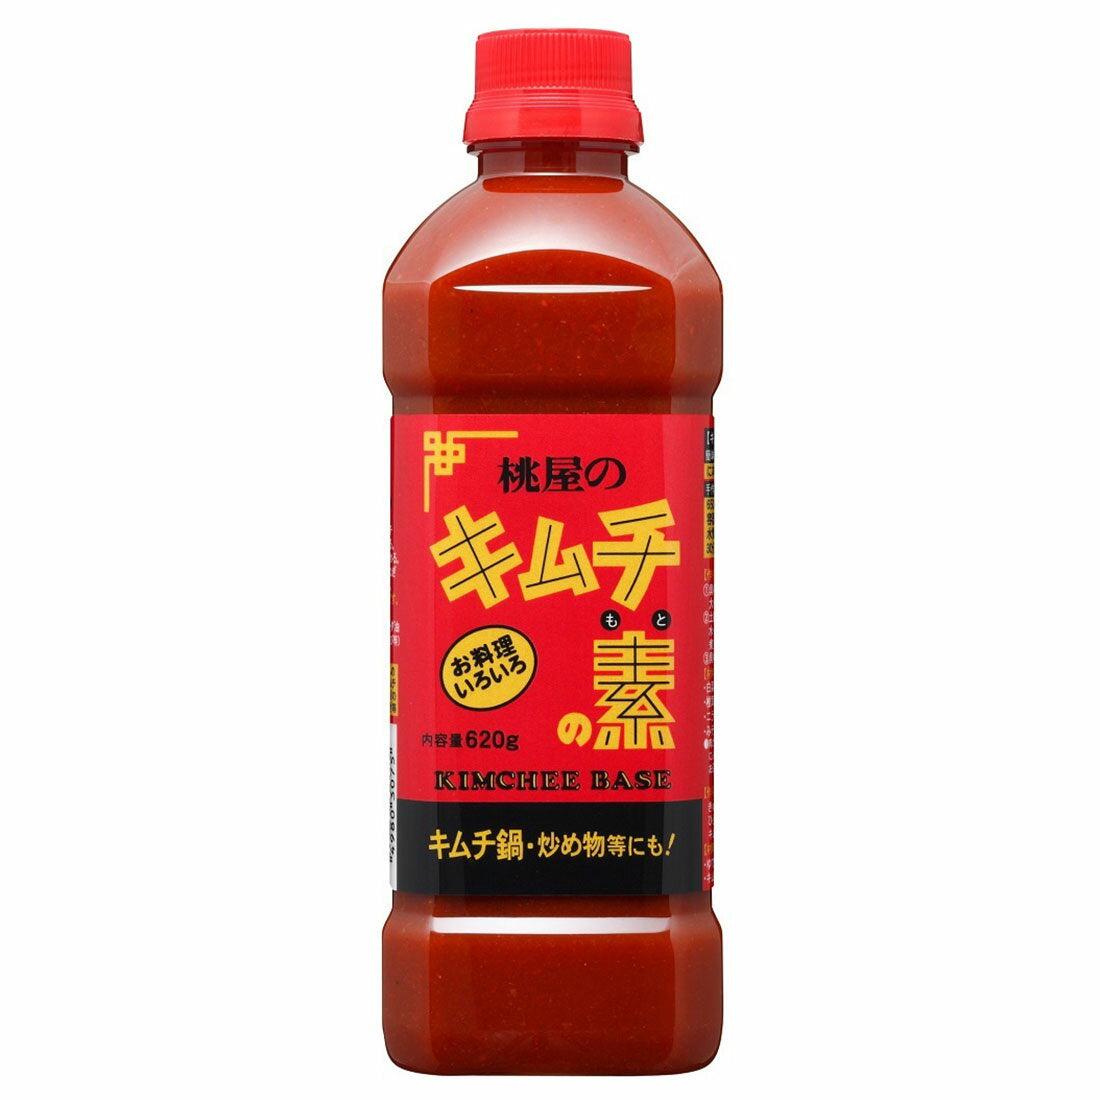 Momoya Kimchi no Moto Kimchee Base Asian Style Spicy Chili Sauce 620g